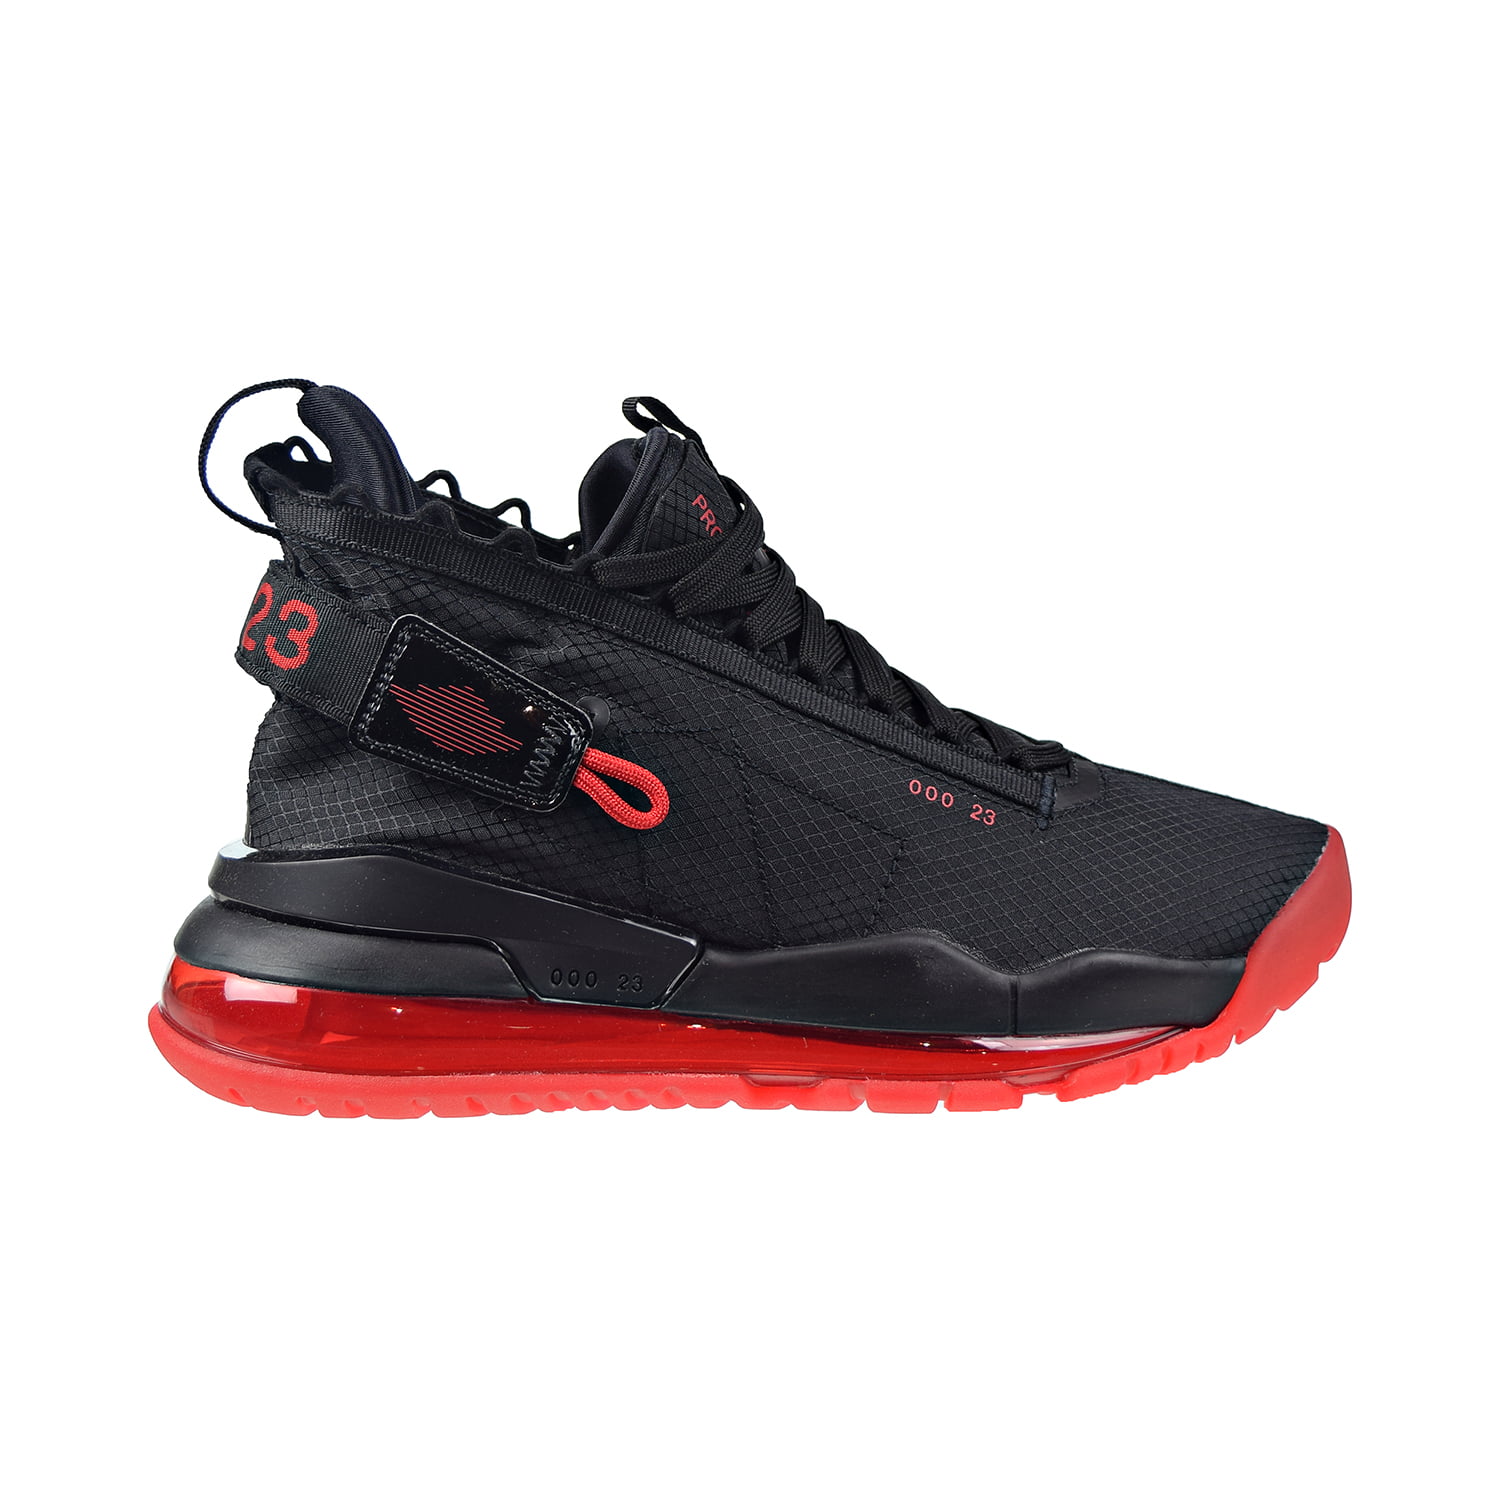 Jordan Proto-Max 720 Men's Shoes Black/University Red bq6623-006 